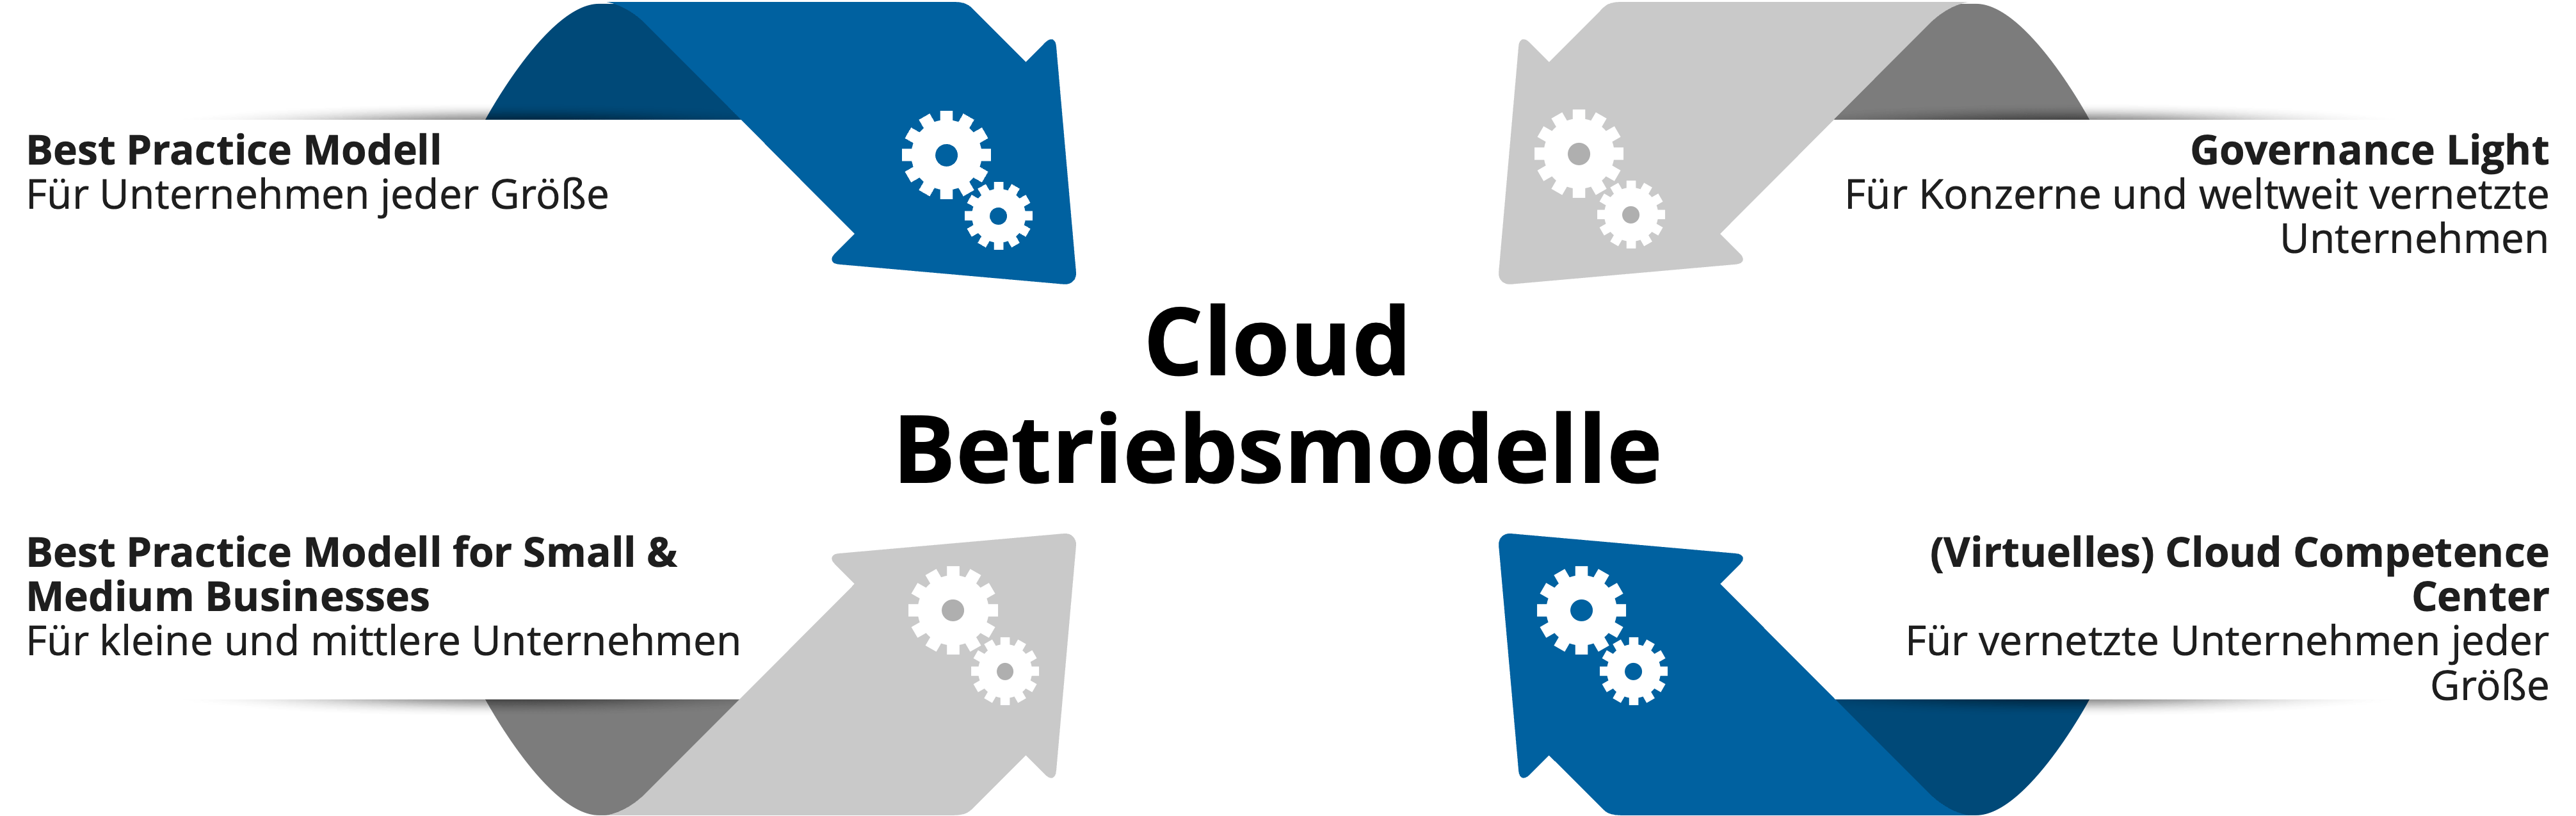 Cloud Betriebsmodelle im Überblick